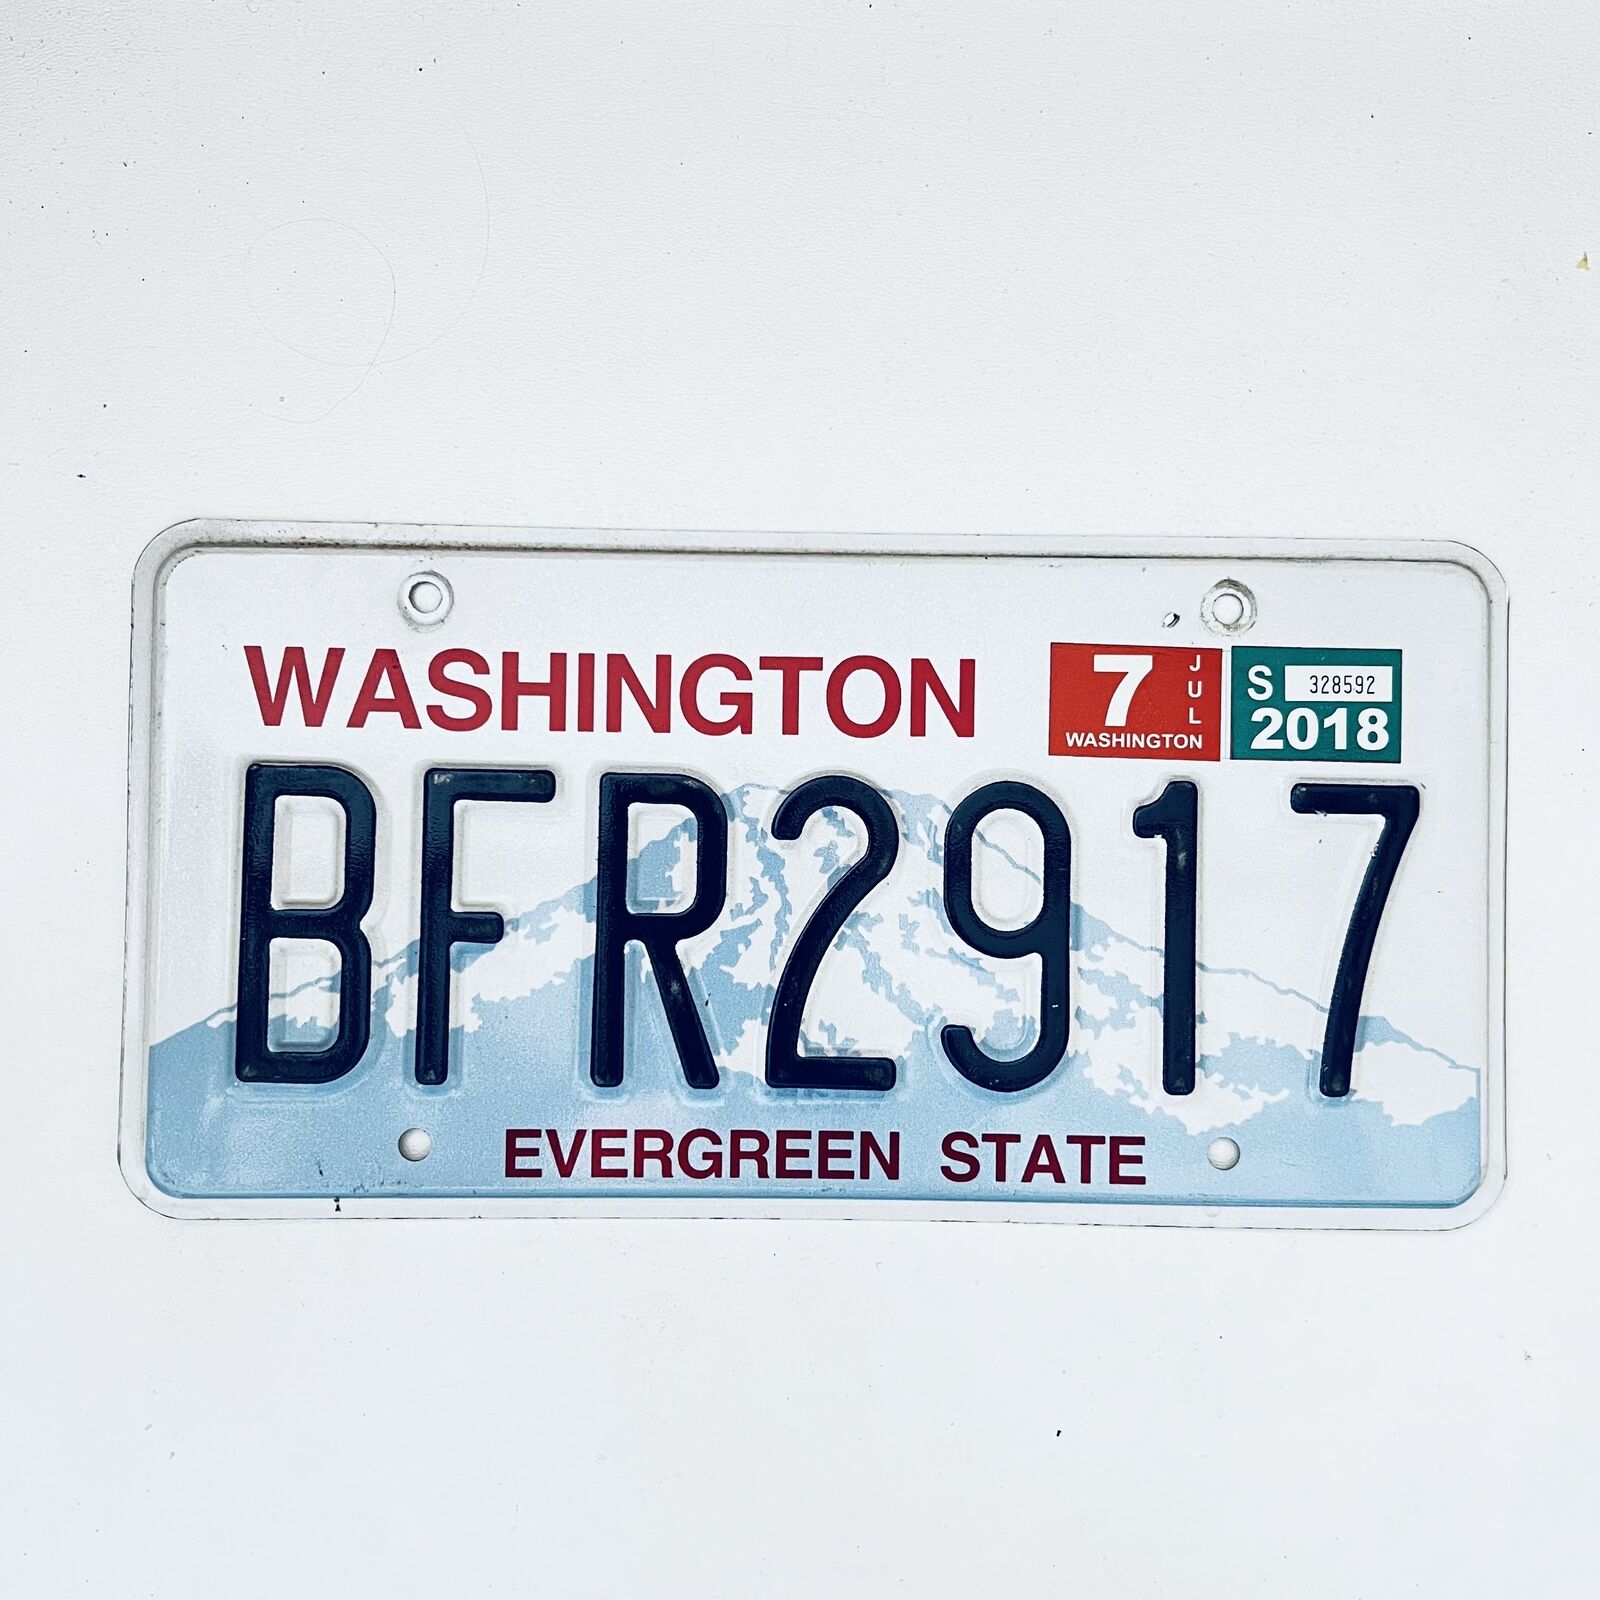 2018 United States Washington Evergreen Passenger License Plate BFR2917